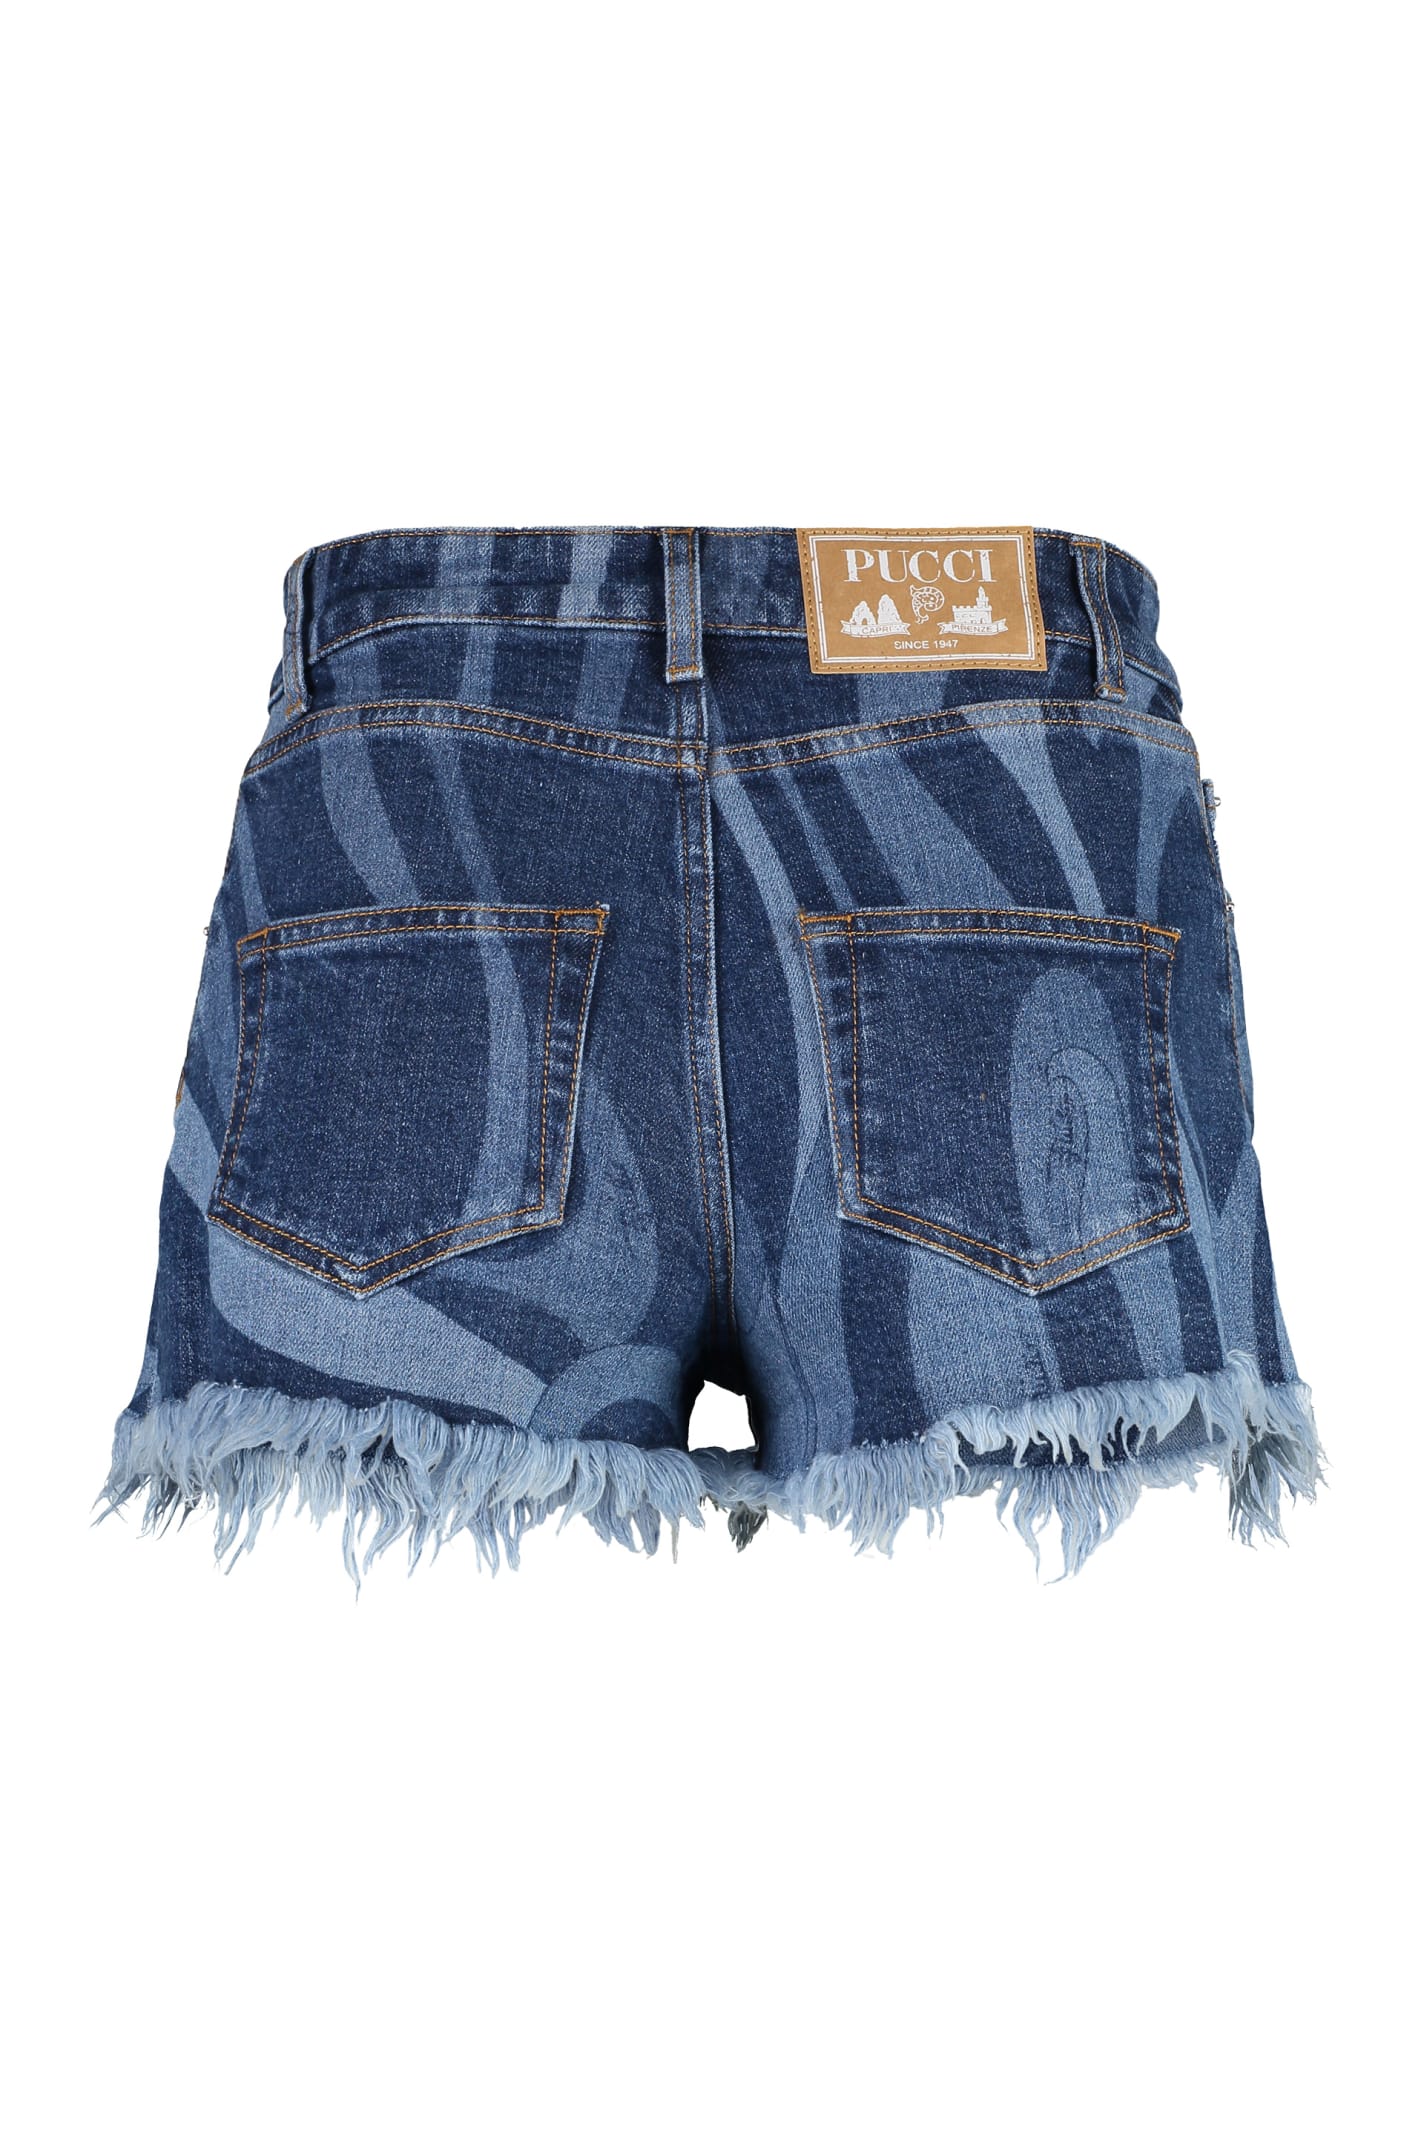 Shop Emilio Pucci Denim Shorts